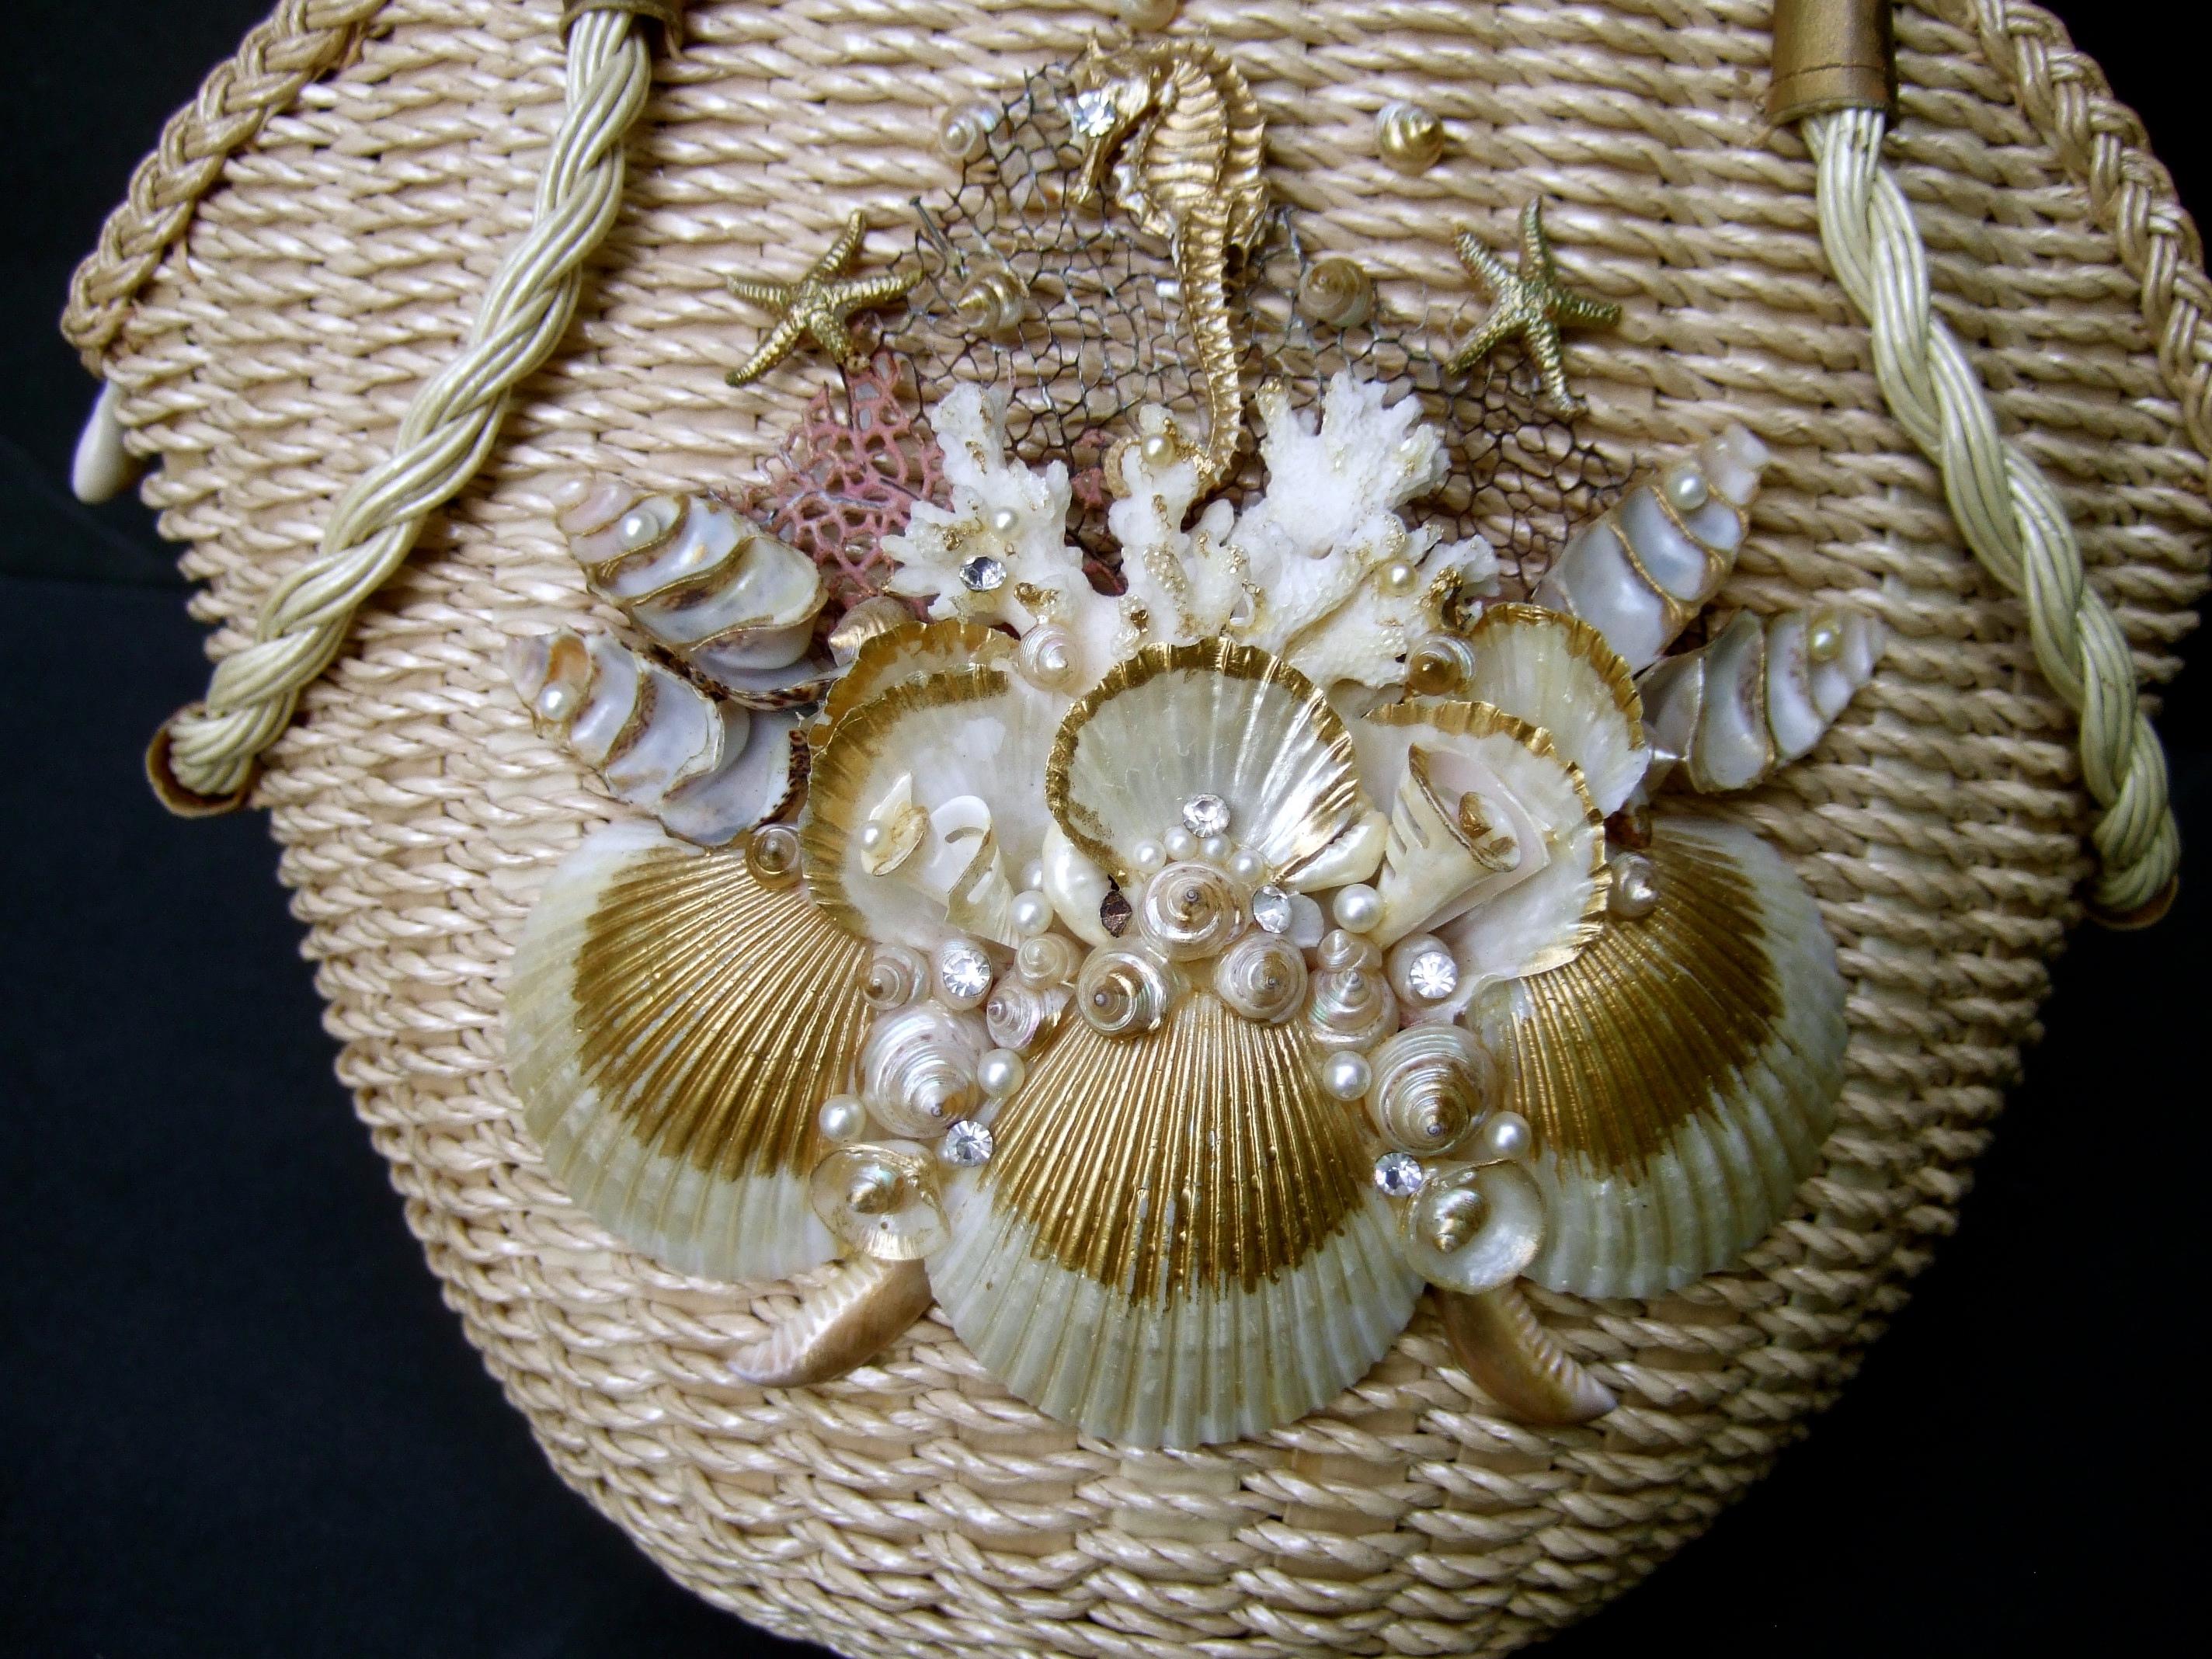 Charming Handmade Artisan Sea Life Woven Wicker Rope Summer Handbag c 1970 For Sale 4